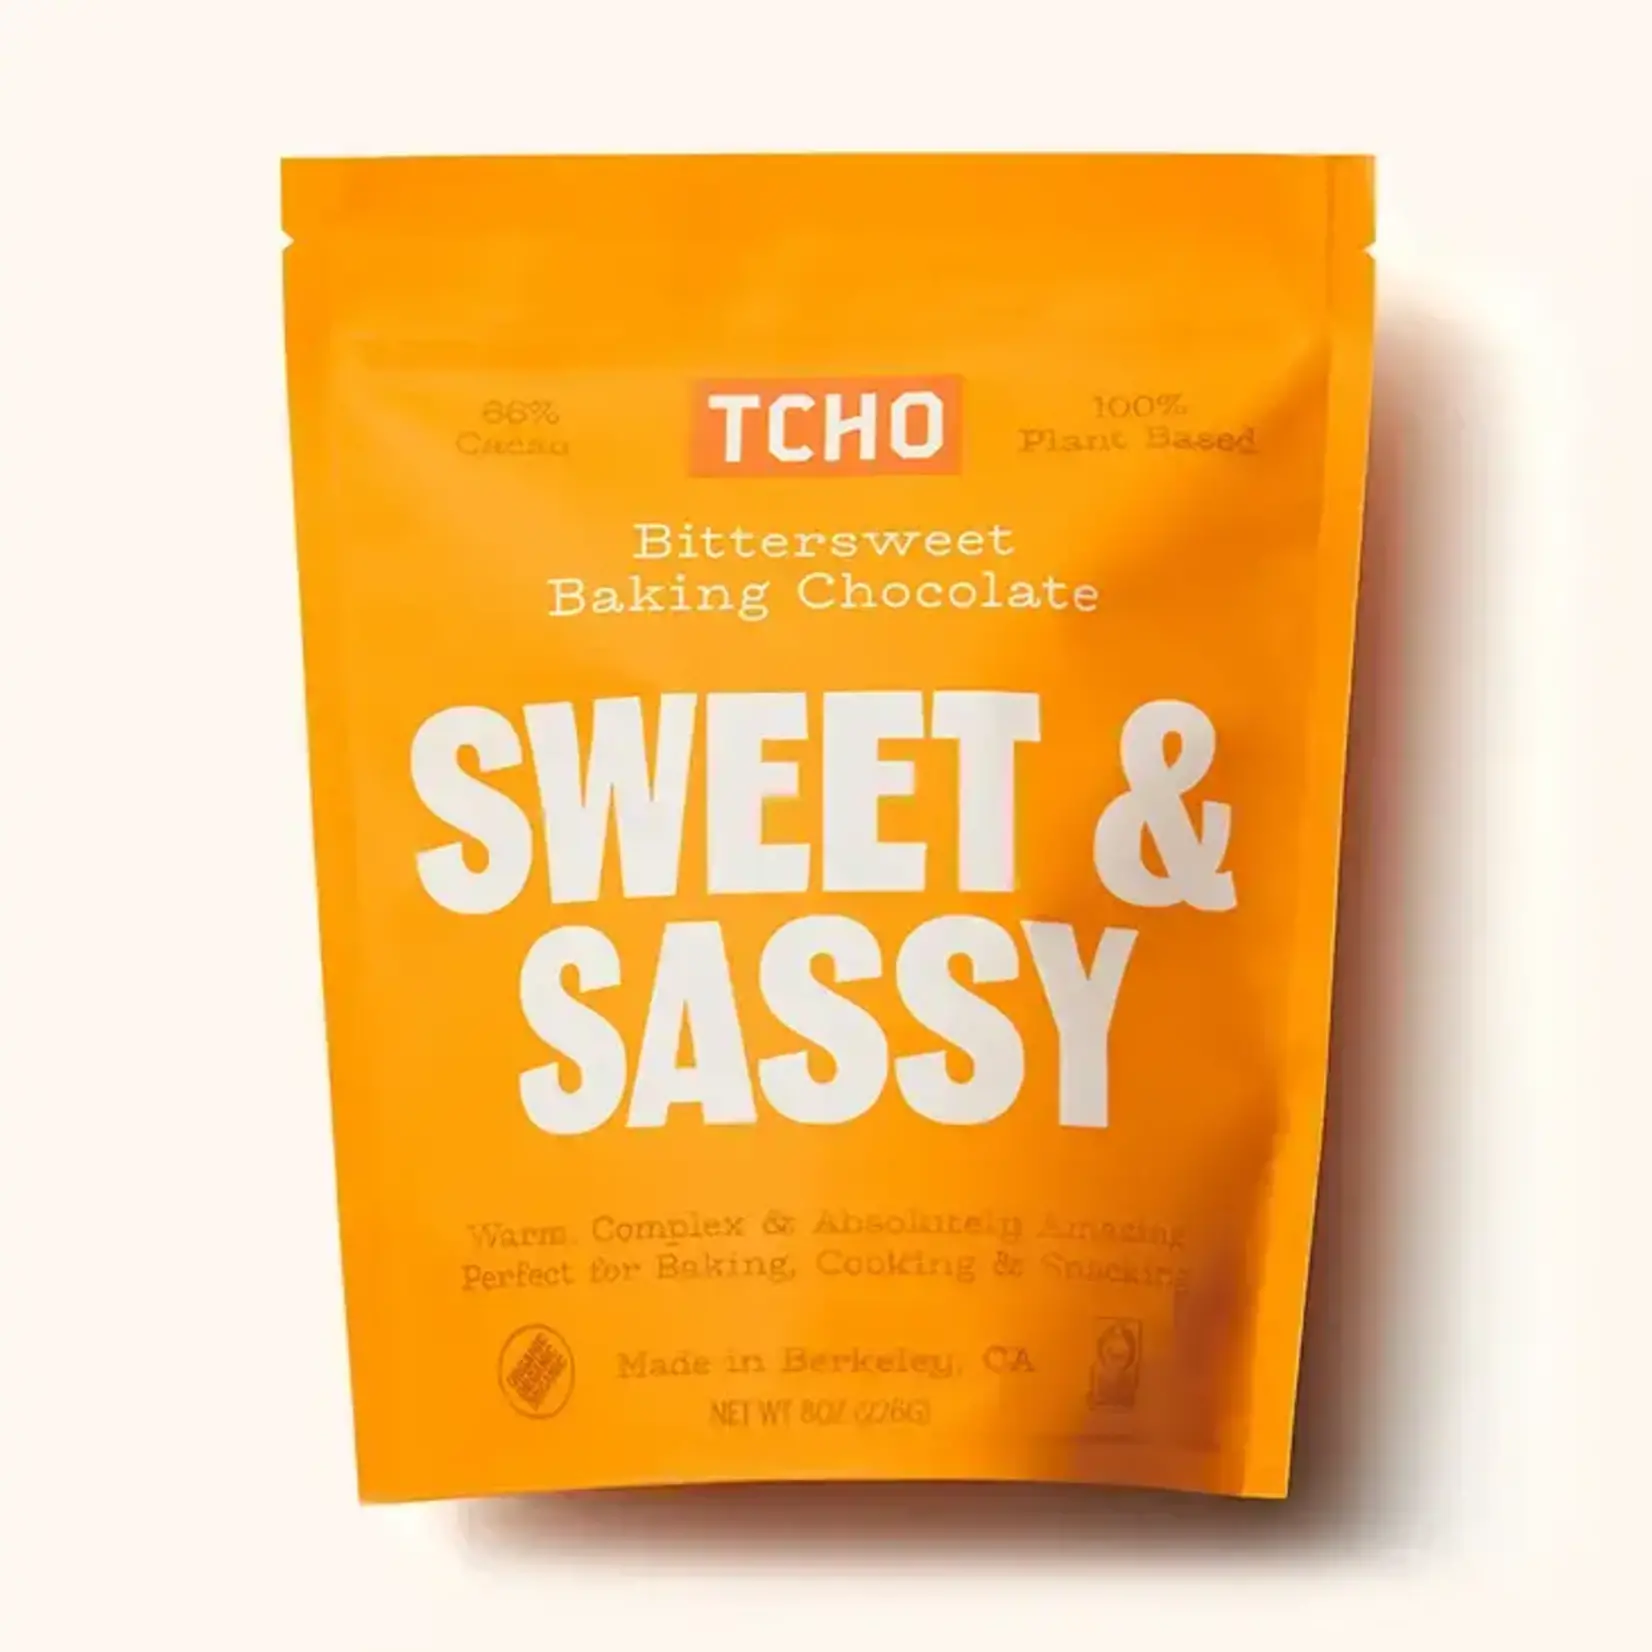 TCHO Sweet & Sassy 66%. Bittersweet Baking Chocolate